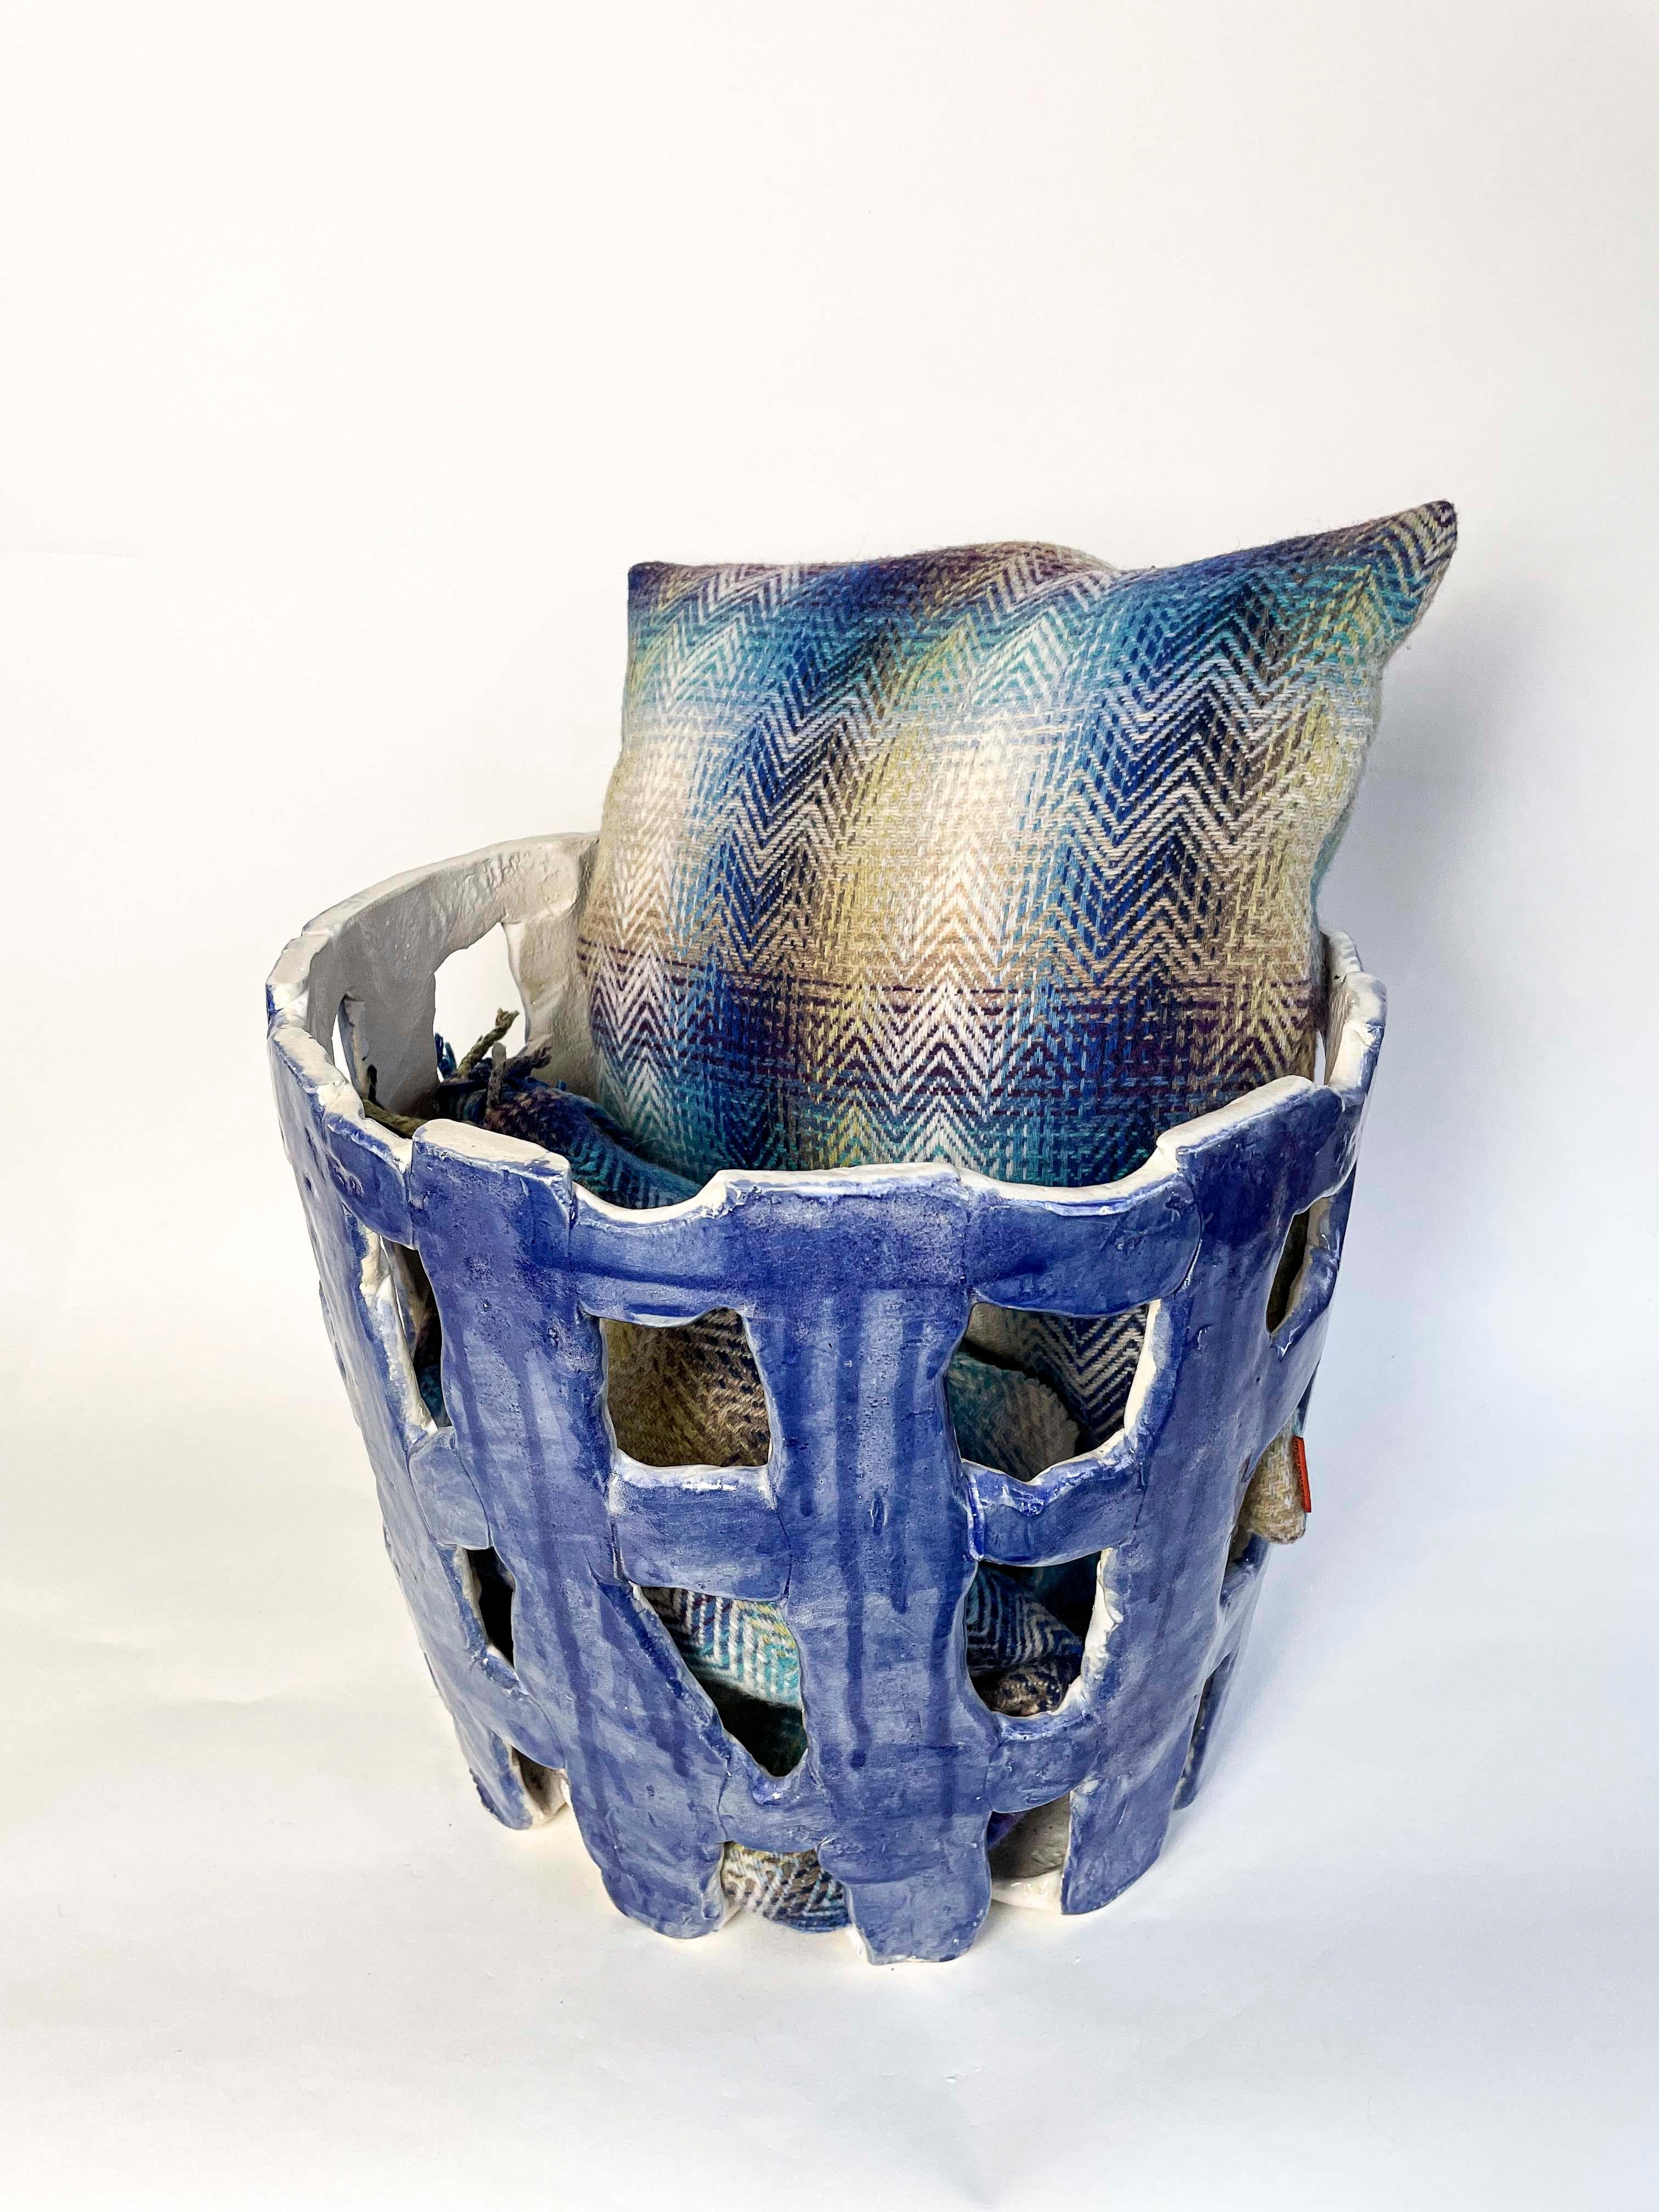 Clay Unique CortoMagDelft ceramic basket For Sale